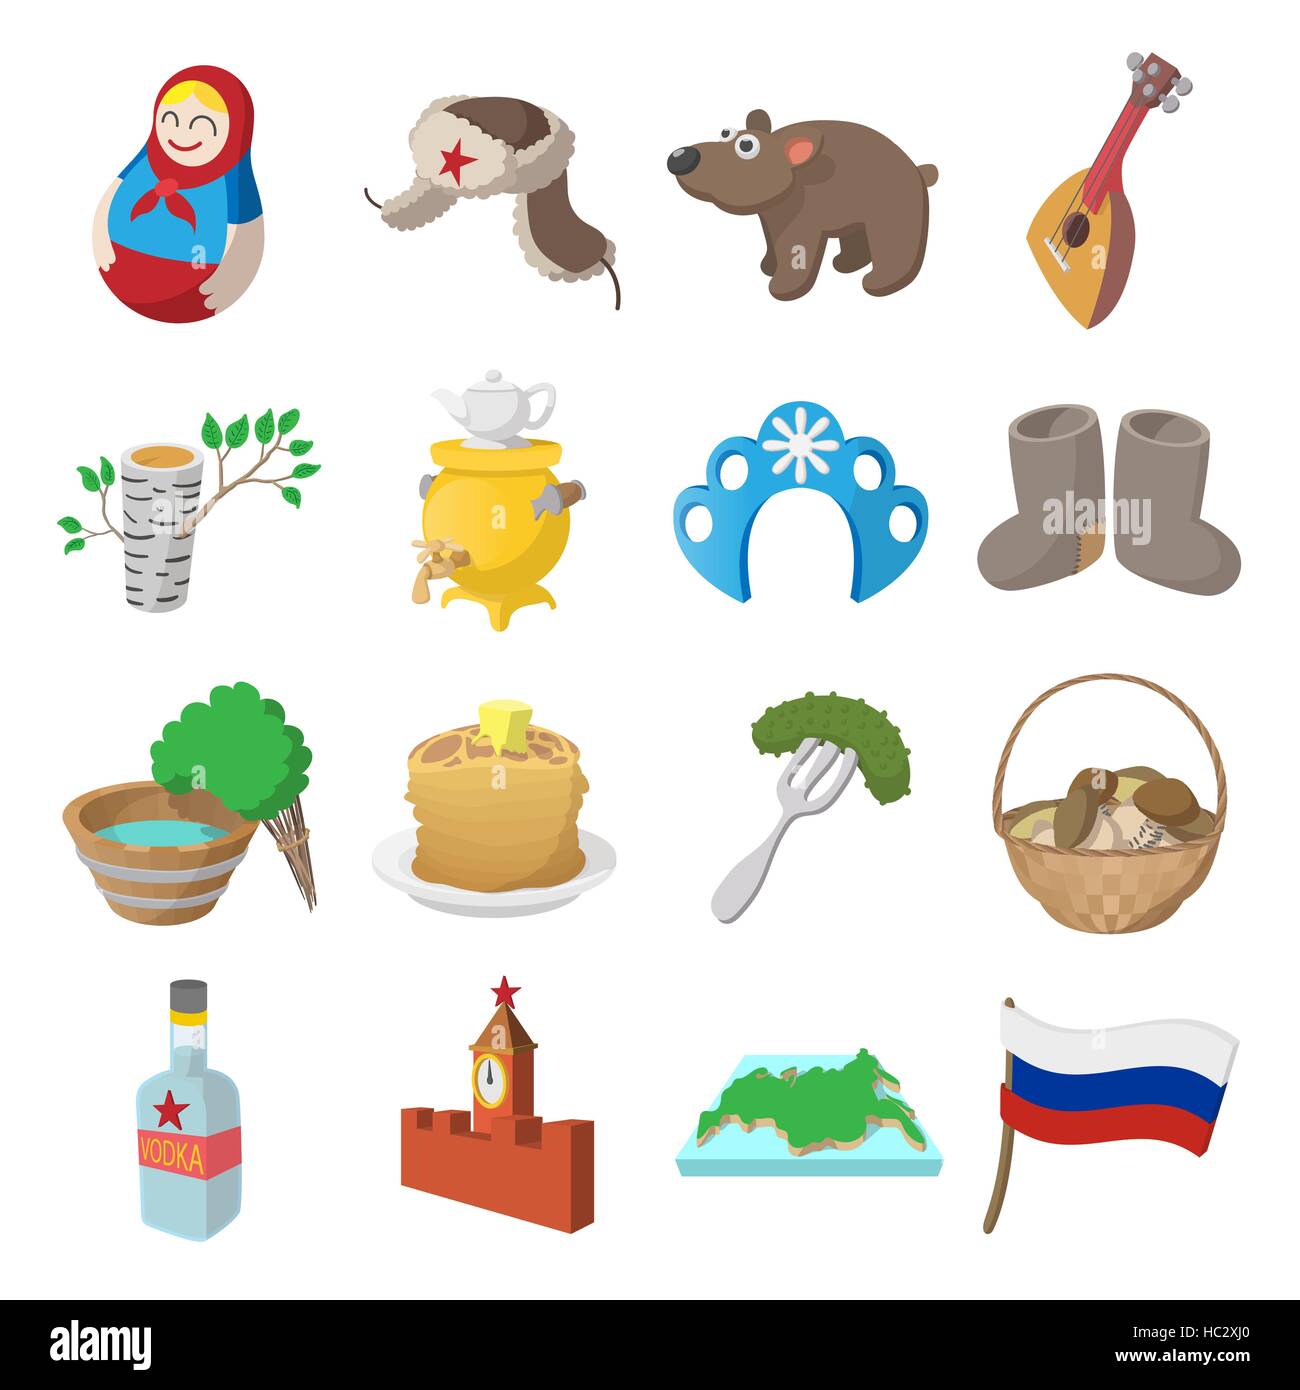 Russia cartoon icons Stock Vector